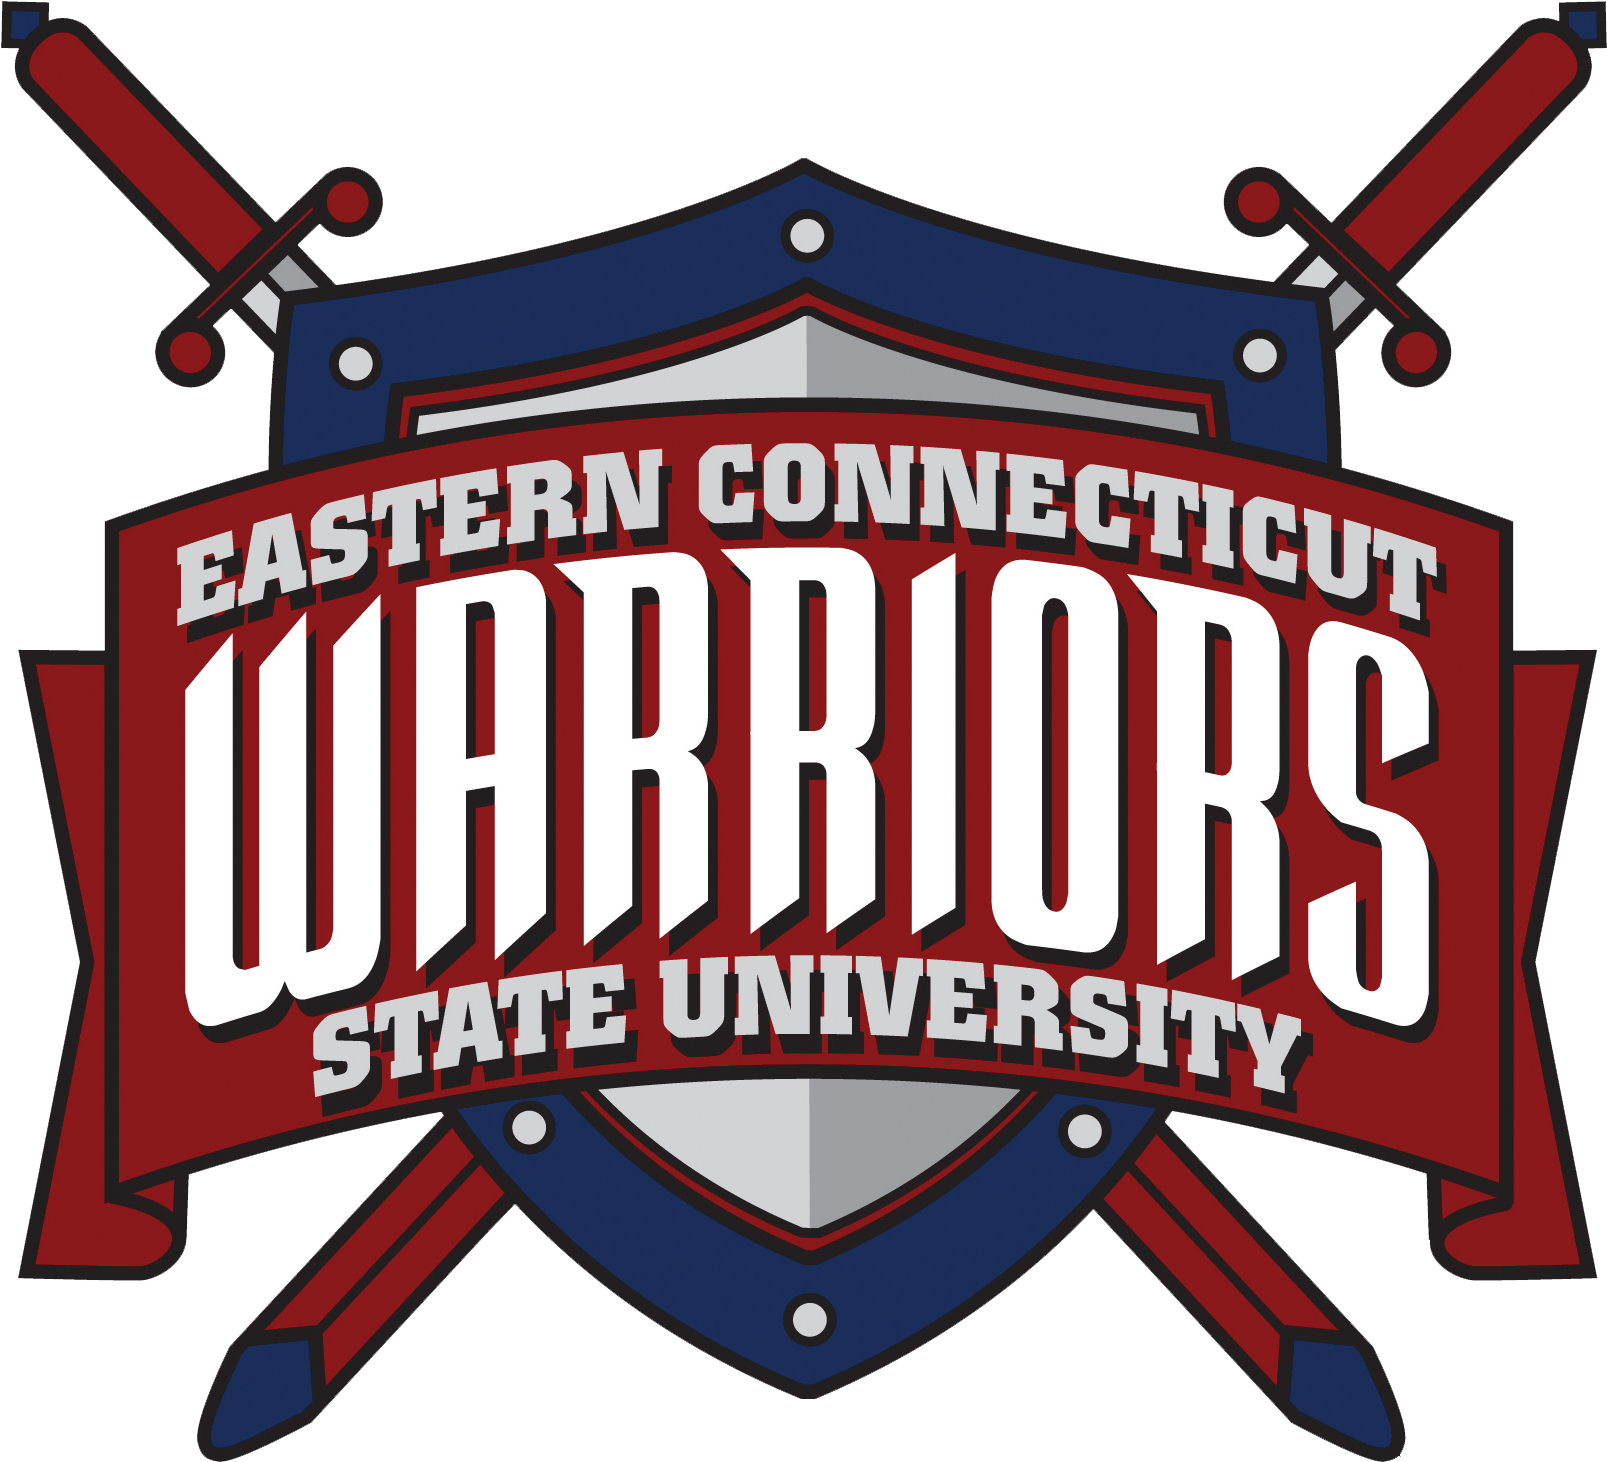 Eastern Connecticut Womens Field Hockey Data - Eastern Ct State University (1606x1606)